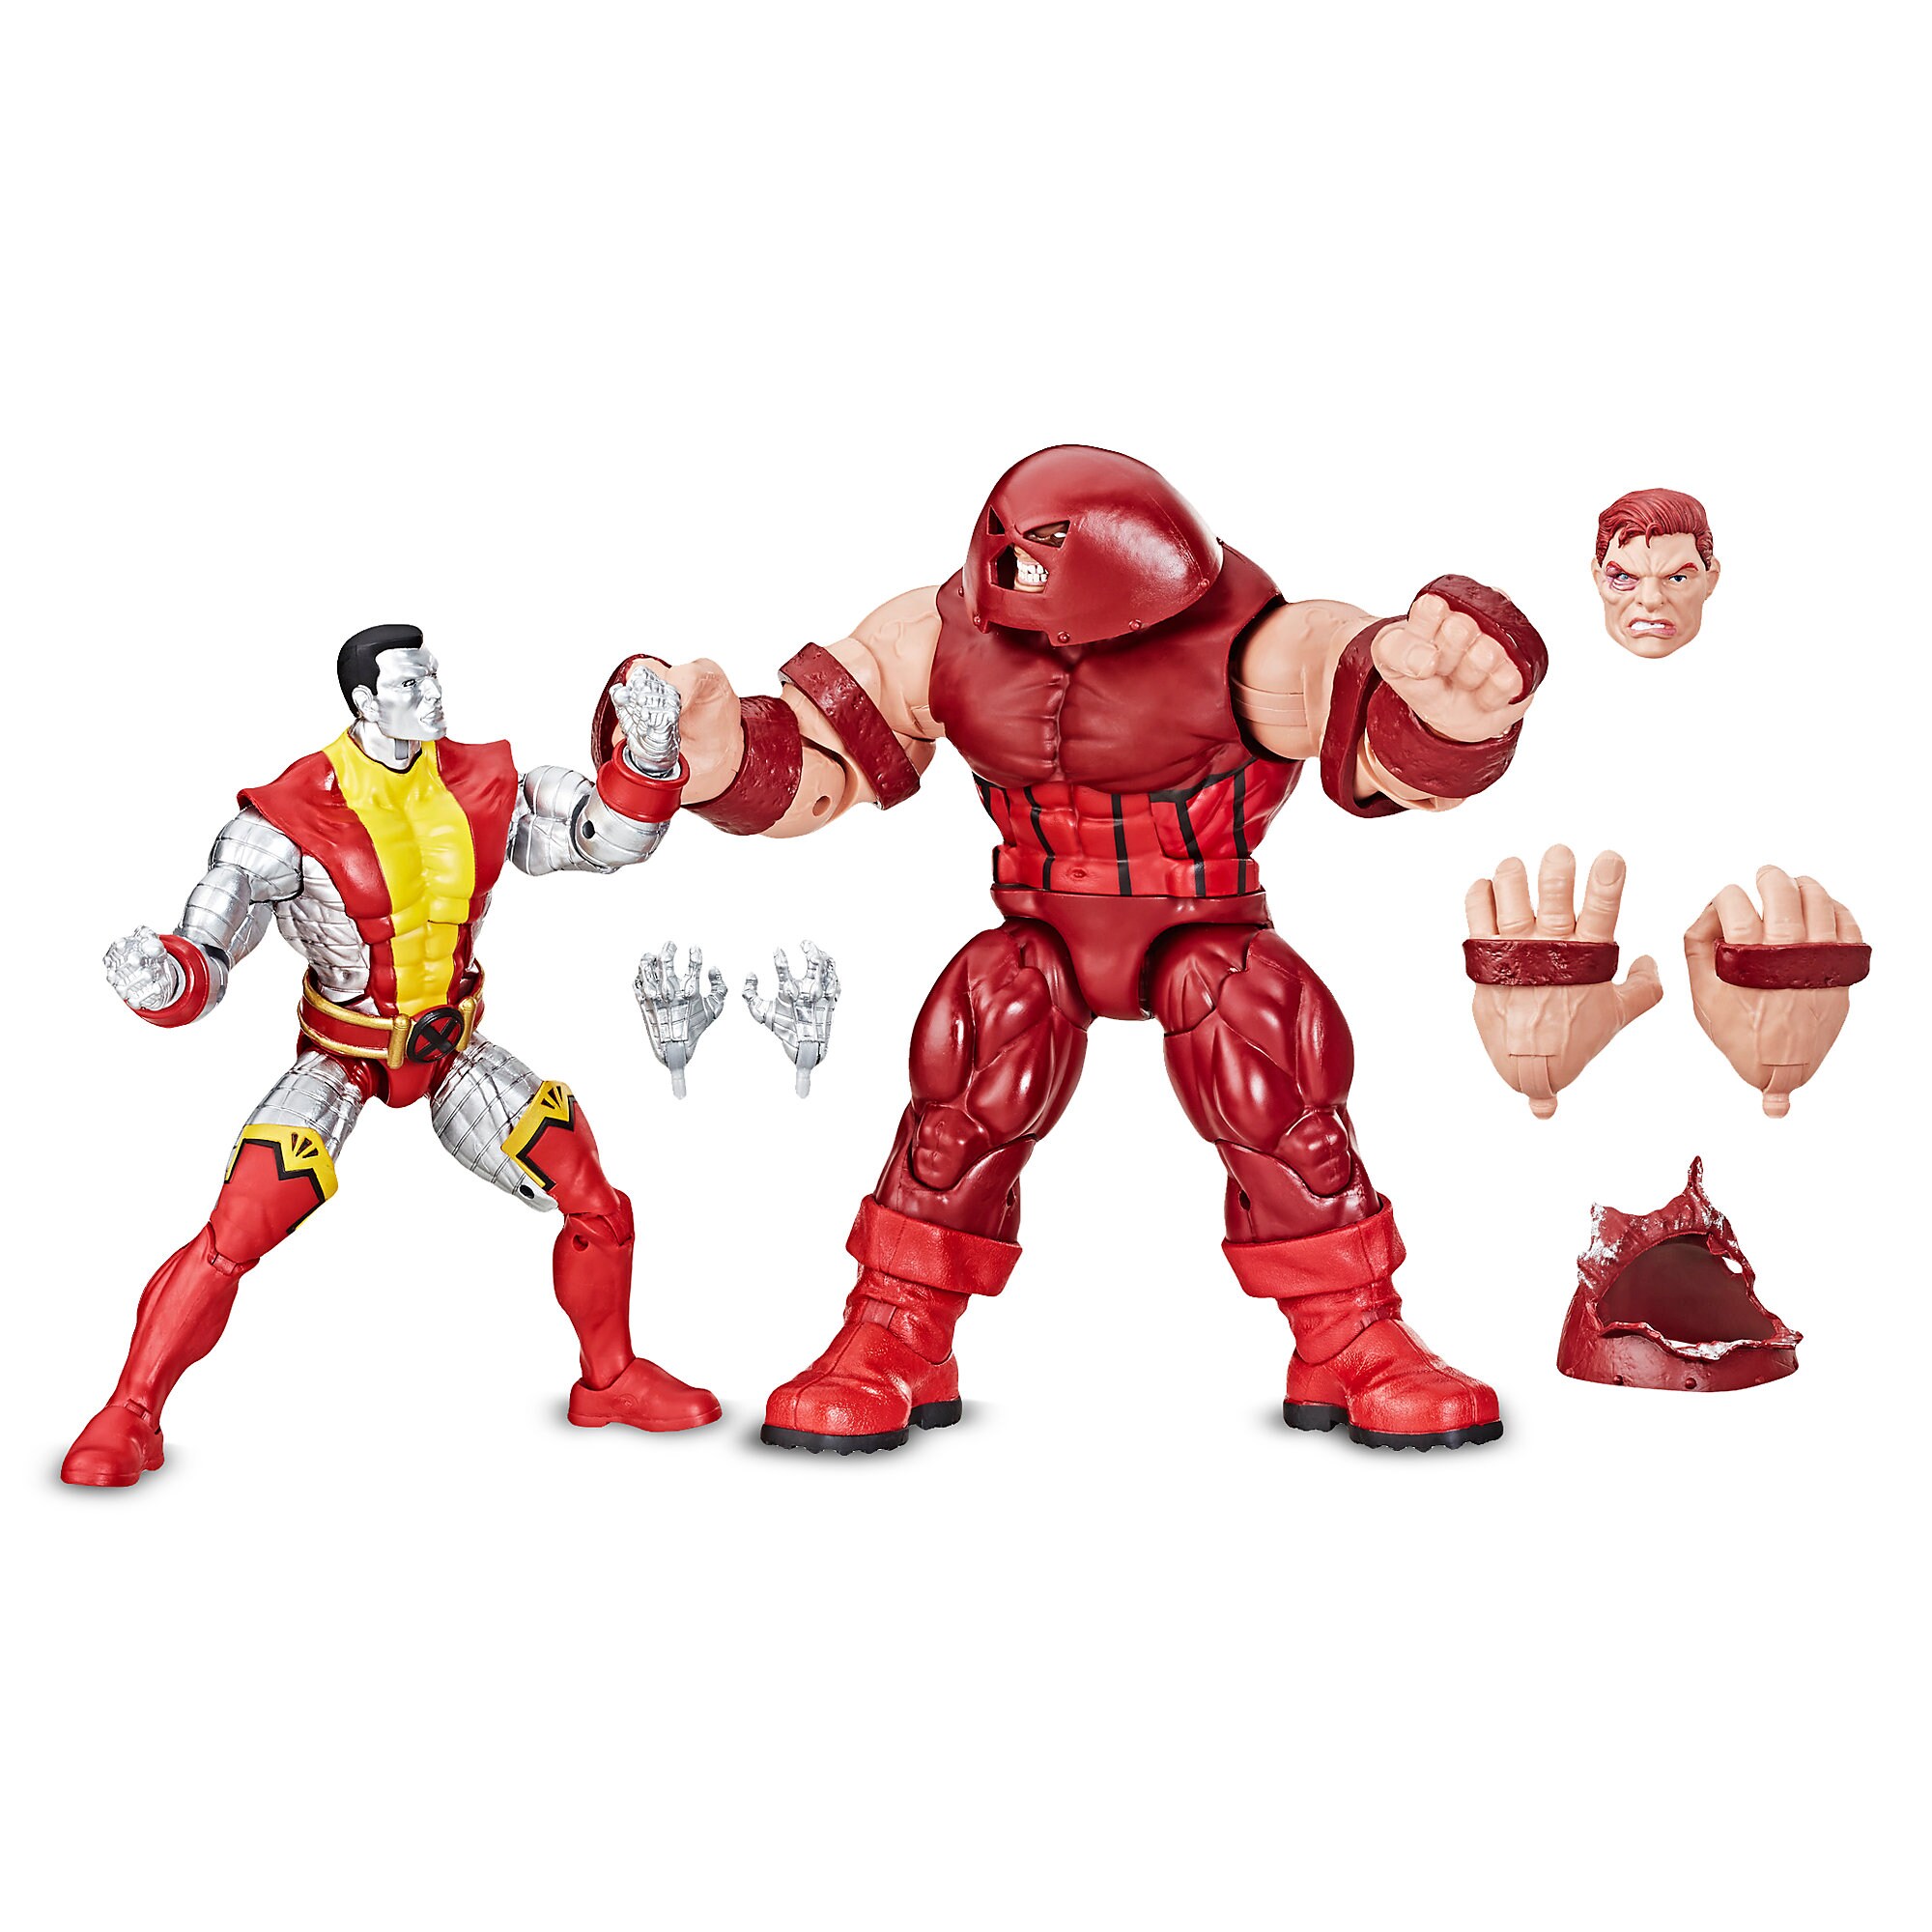 Colossus and Juggernaut Action Figure Set - Legends Series - Marvel 80th Anniversary